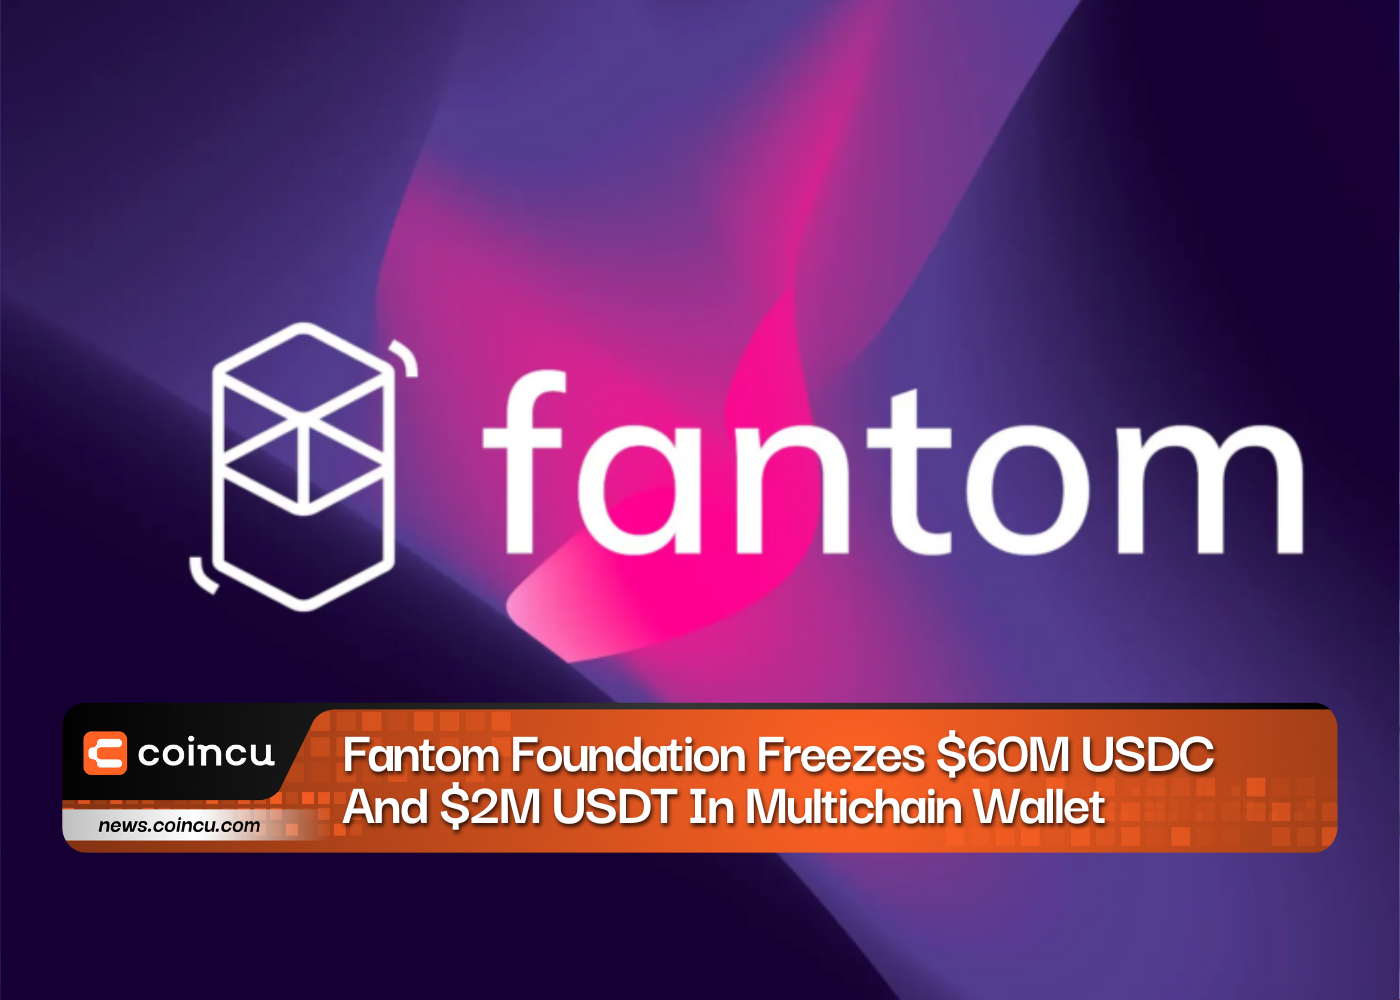 Fantom Foundation Freezes $60M USDC and $2M USDT In Multichain Wallet